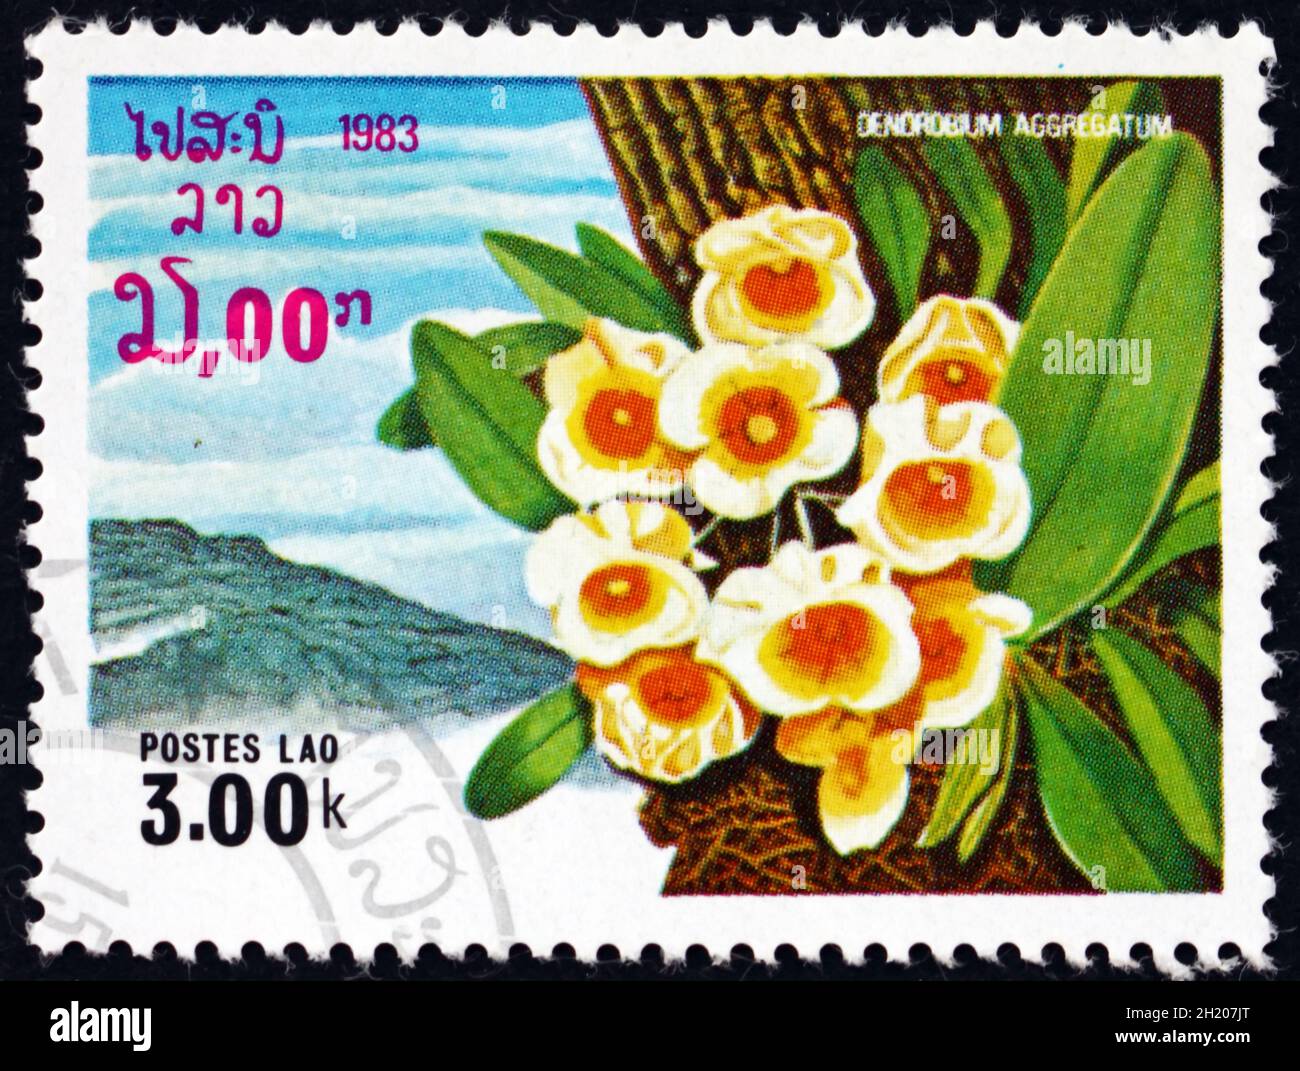 LAOS - CIRCA 1983: a stamp printed in Laos shows dendrobium aggregatum, orchid, circa 1983 Stock Photo